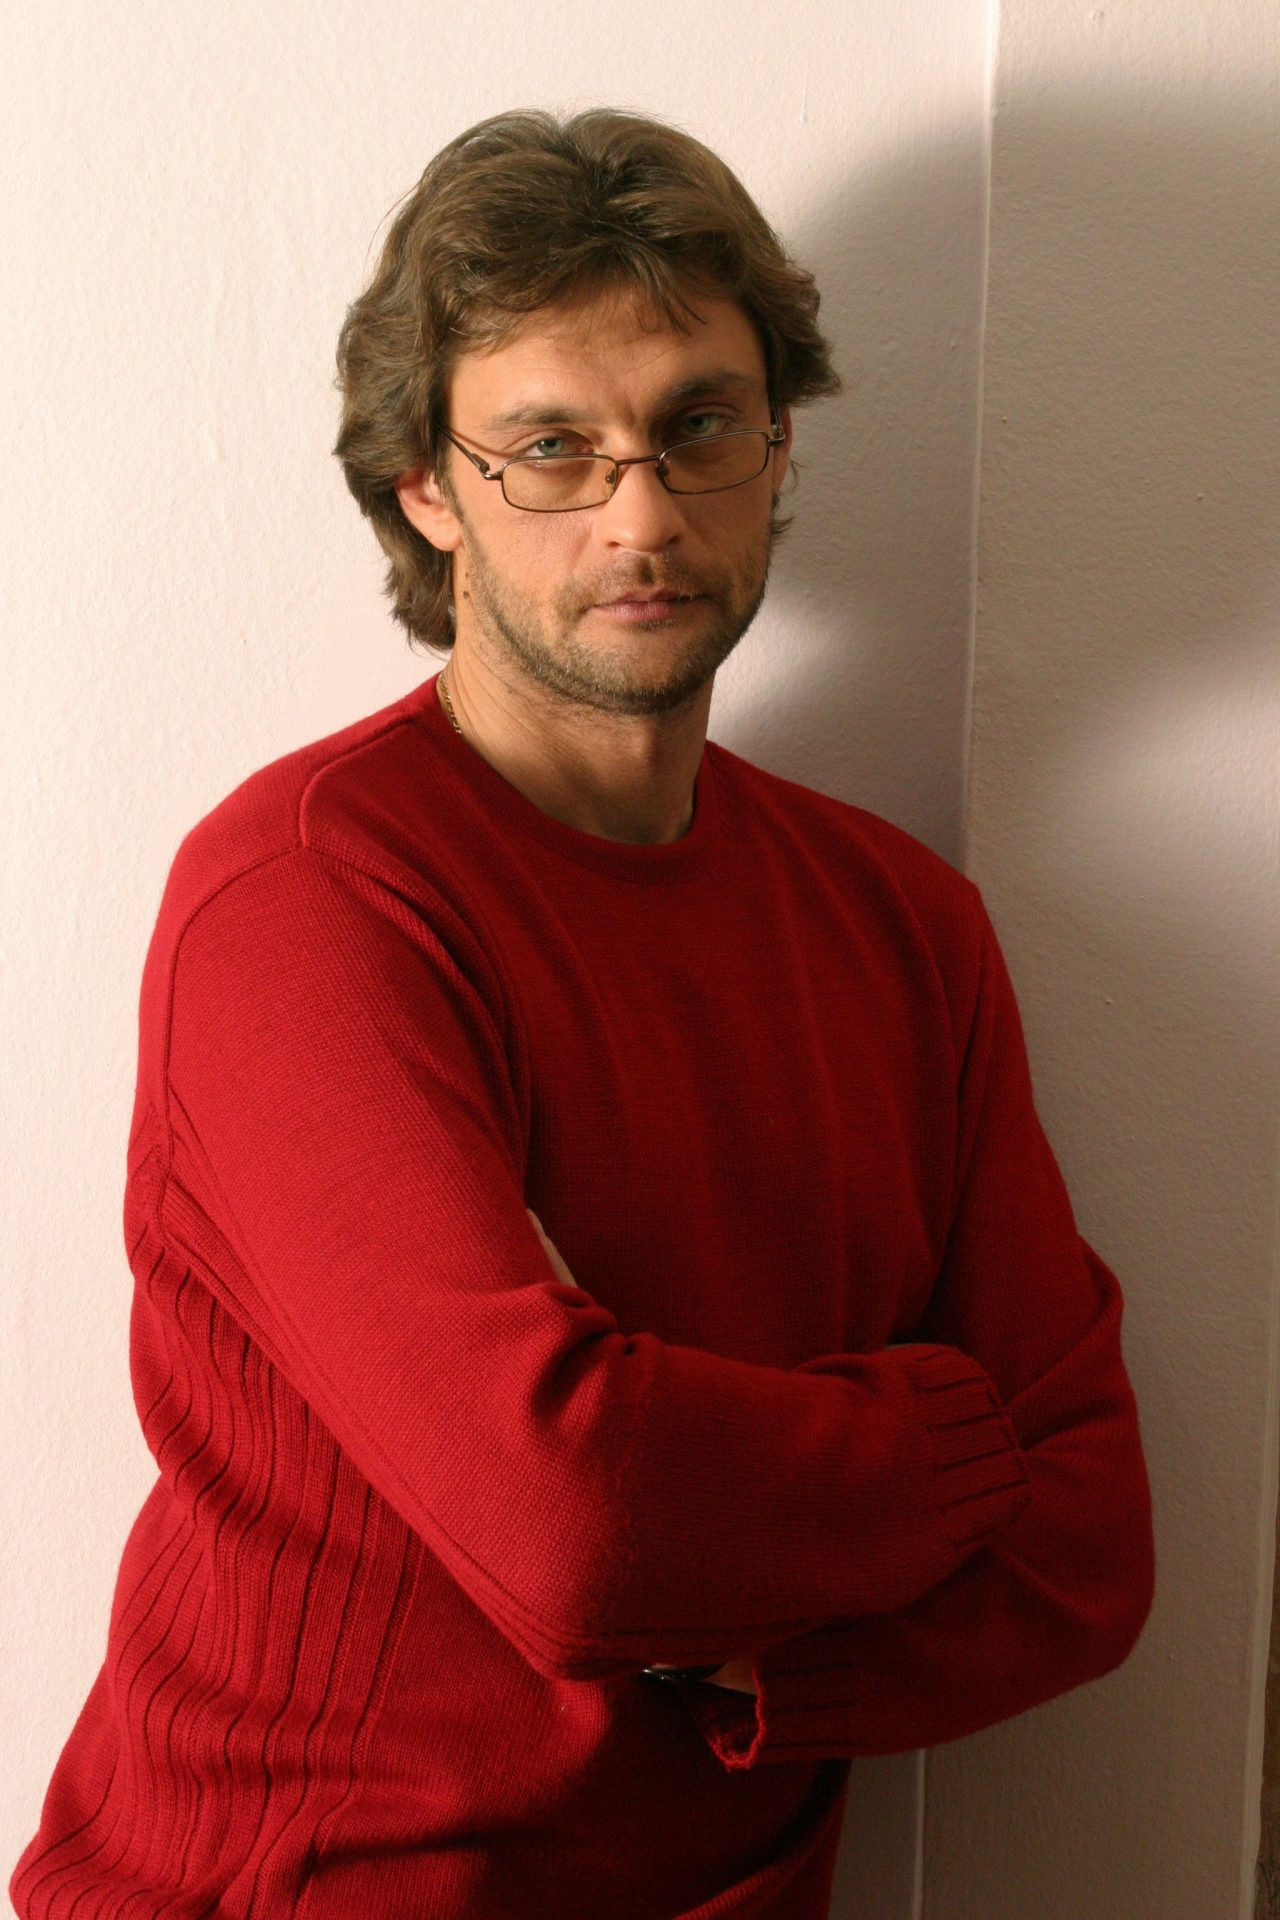 Александр Домогаров (Aleksandr Domogarov)